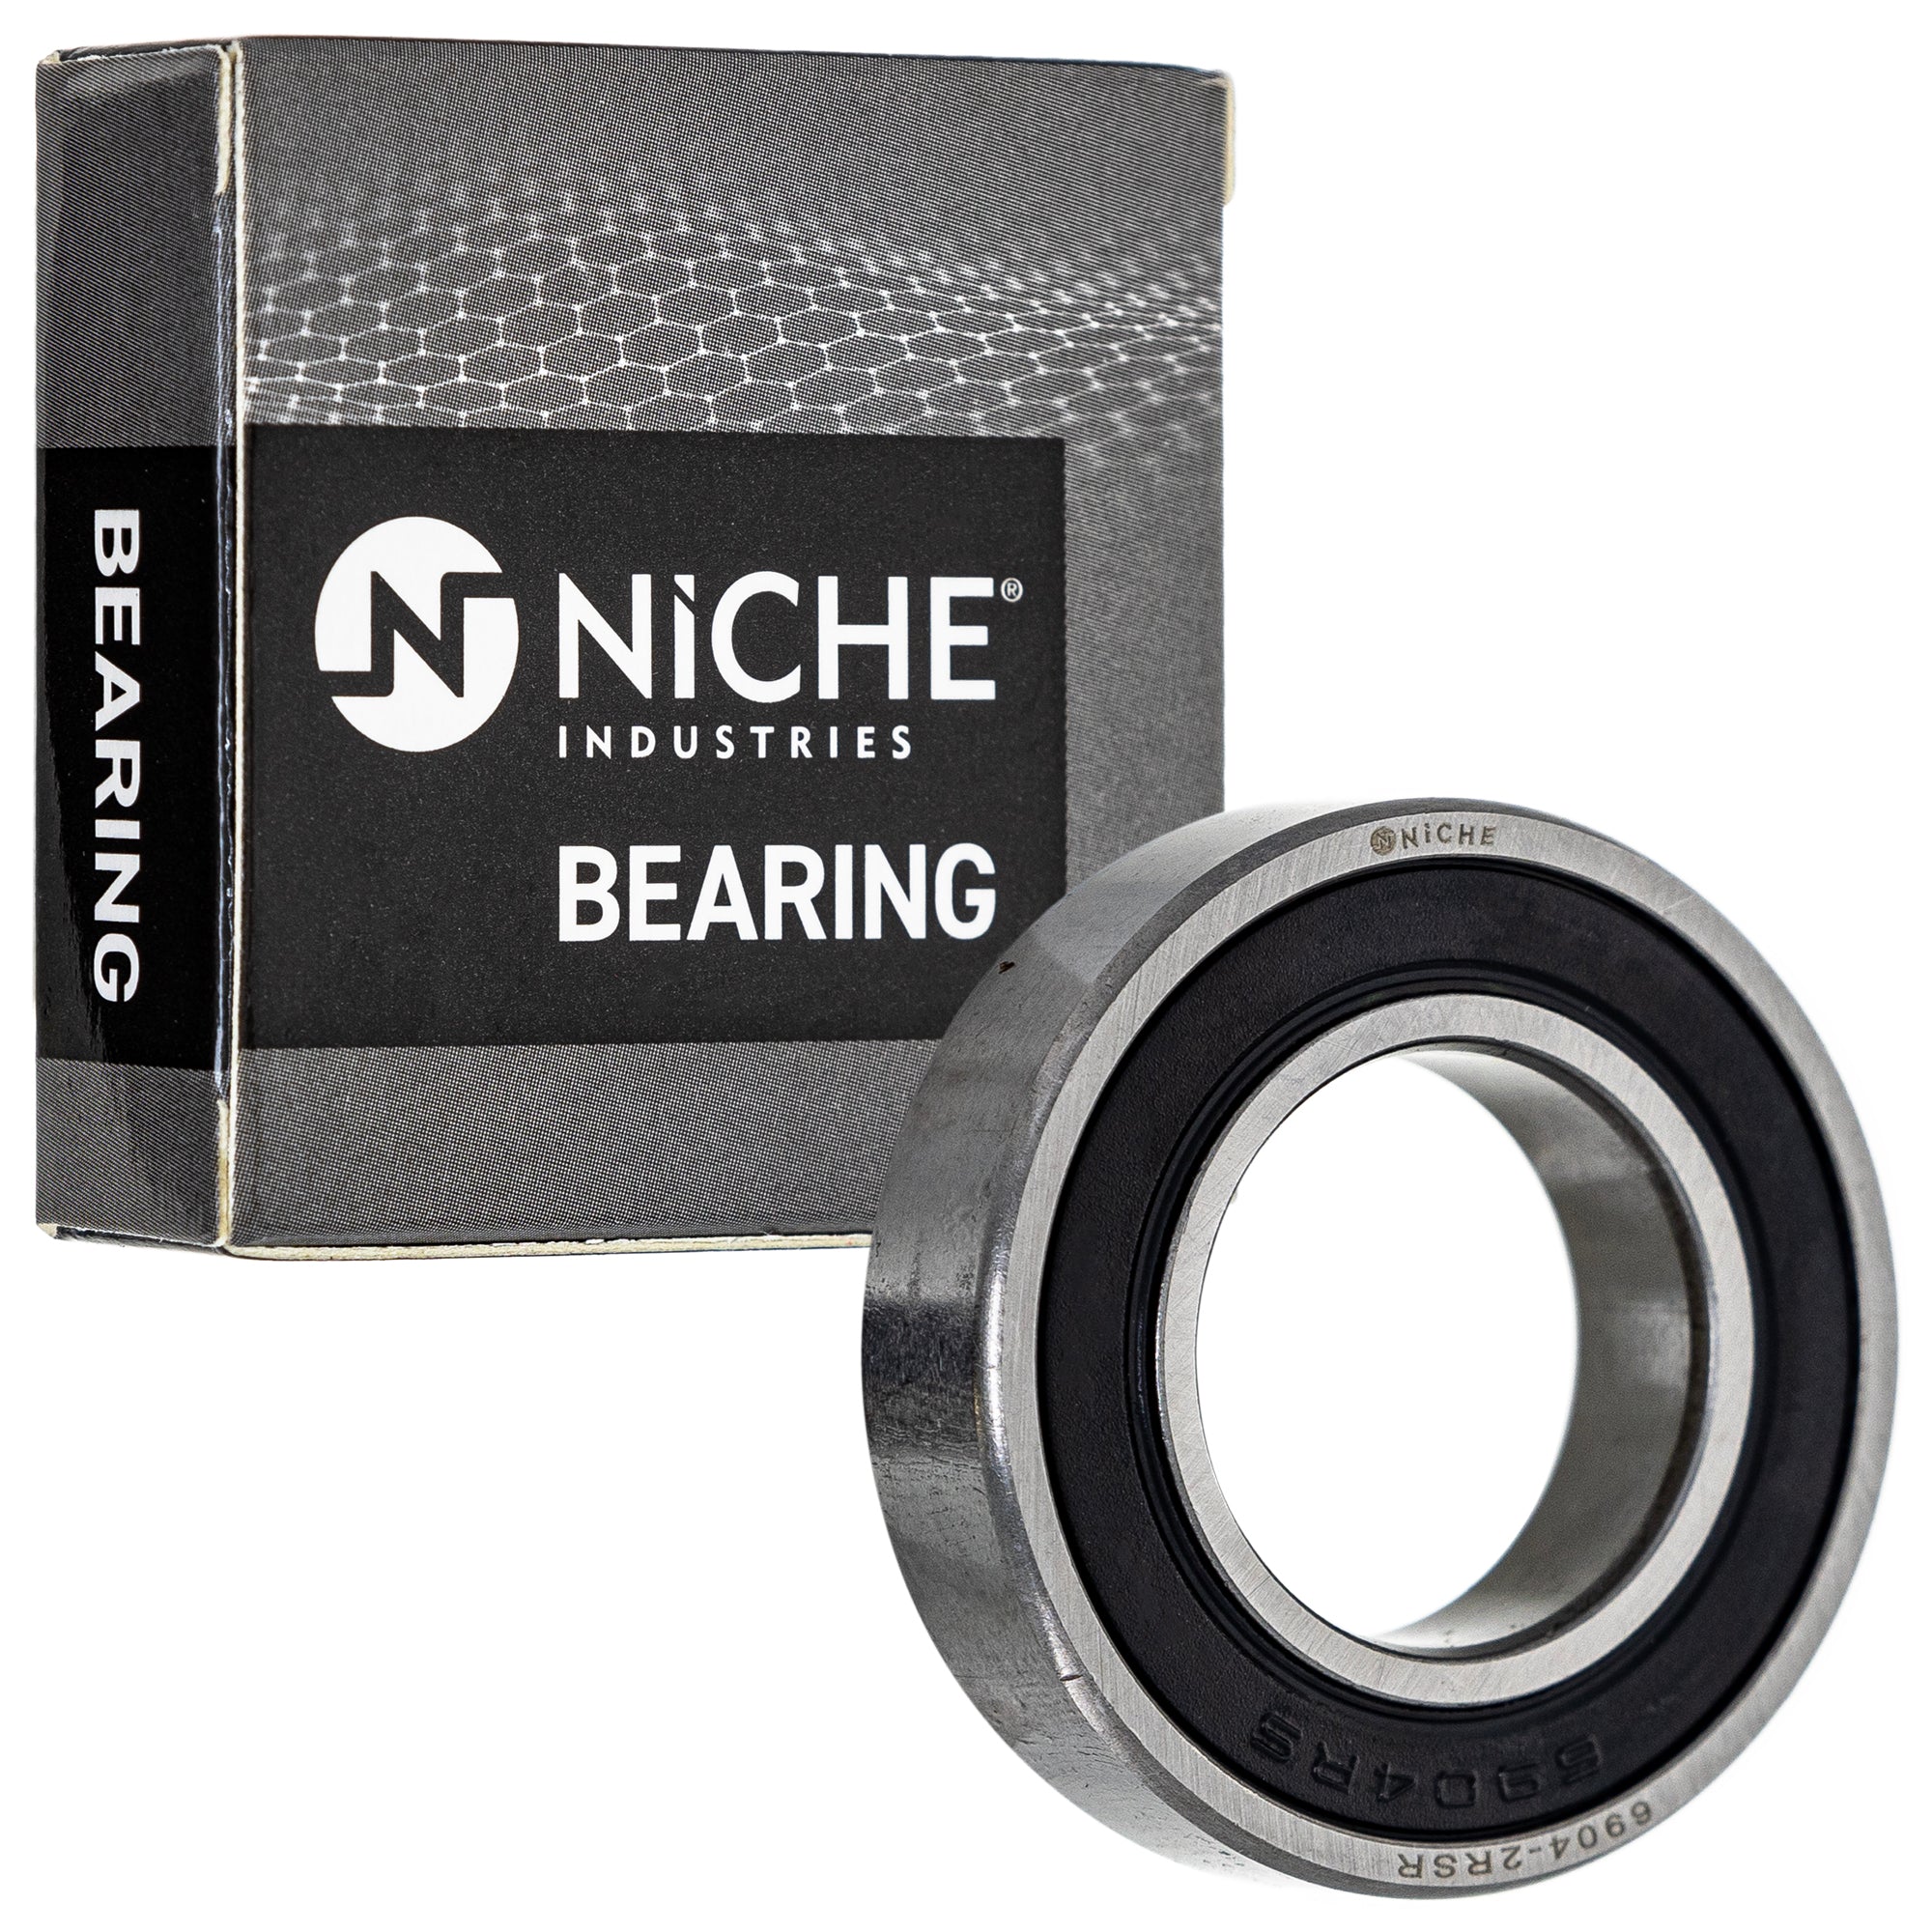 NICHE 519-CBB2287R Bearing 2-Pack for zOTHER YZ85 XR80R XR80 XR75